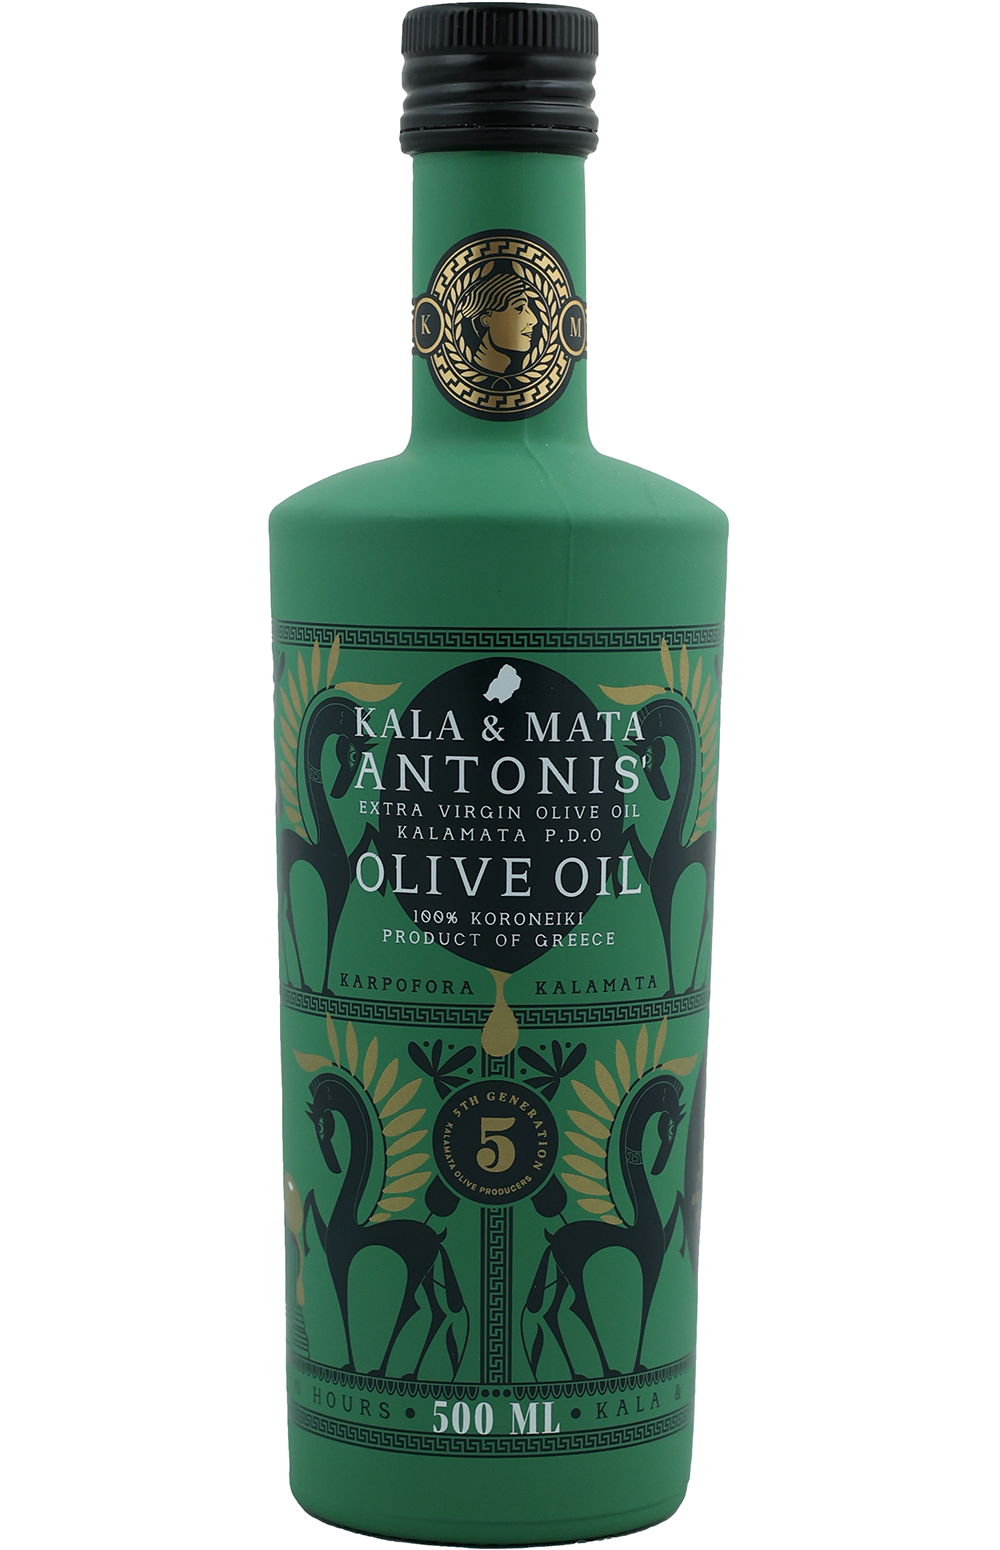 Antonis' Extra Virgin Olive Oil